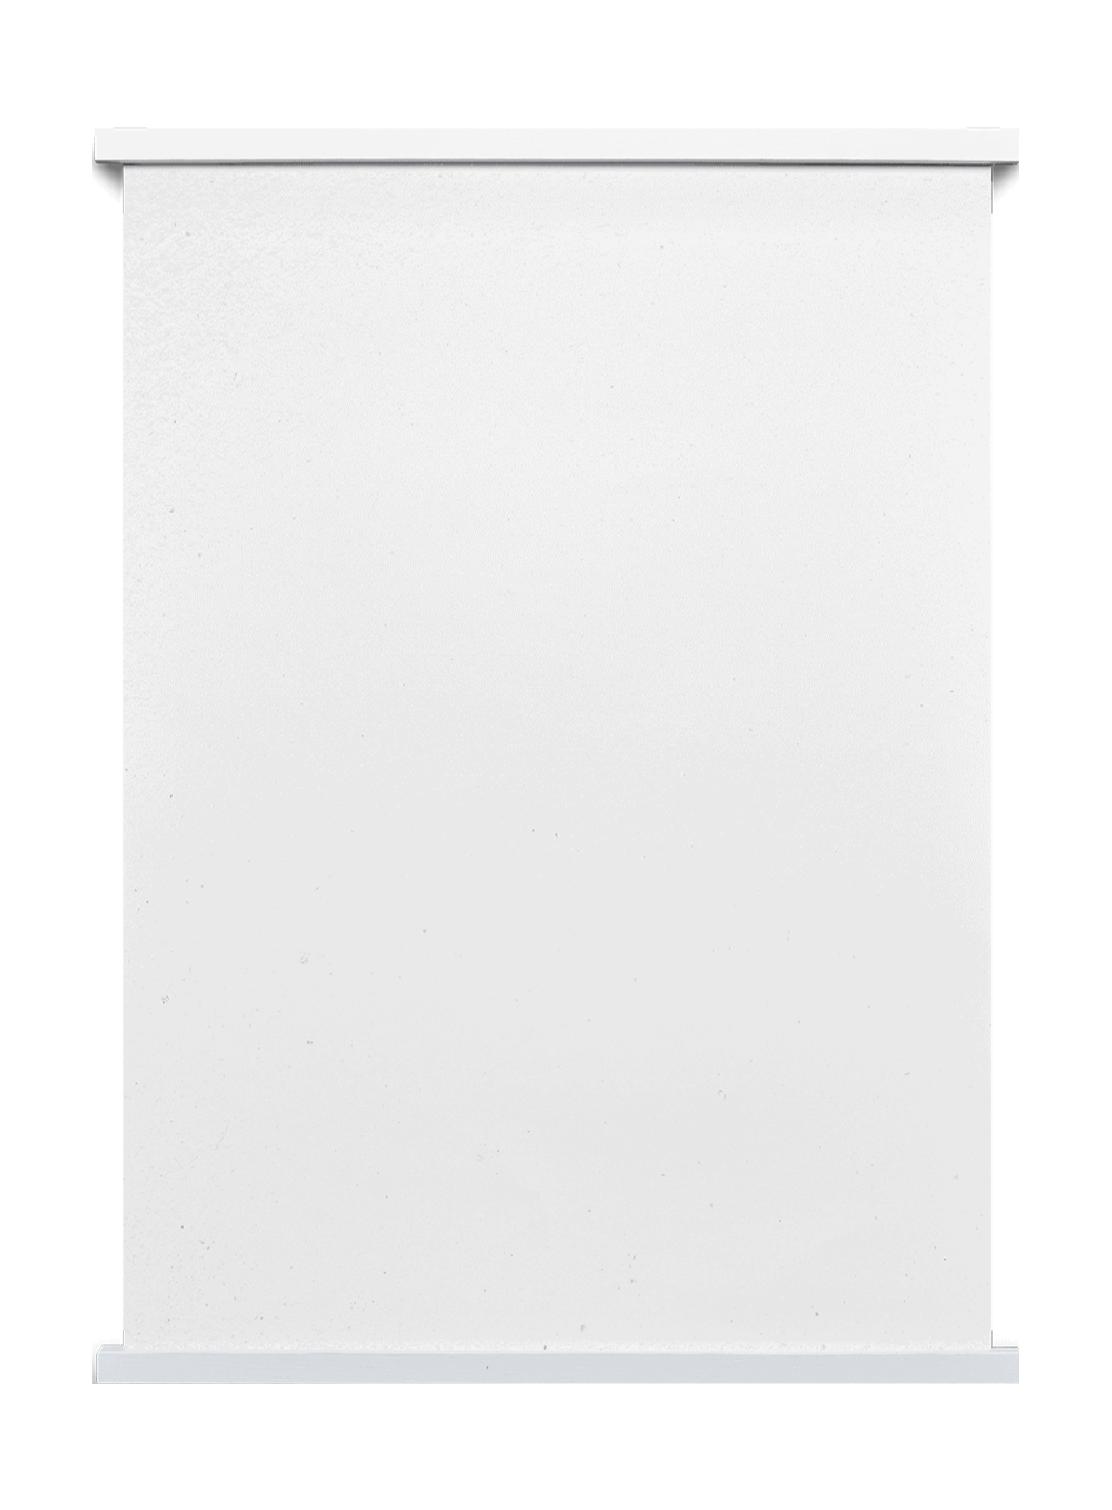 Paper Collective S tii cks 33 magnetisk plakatstang, hvid